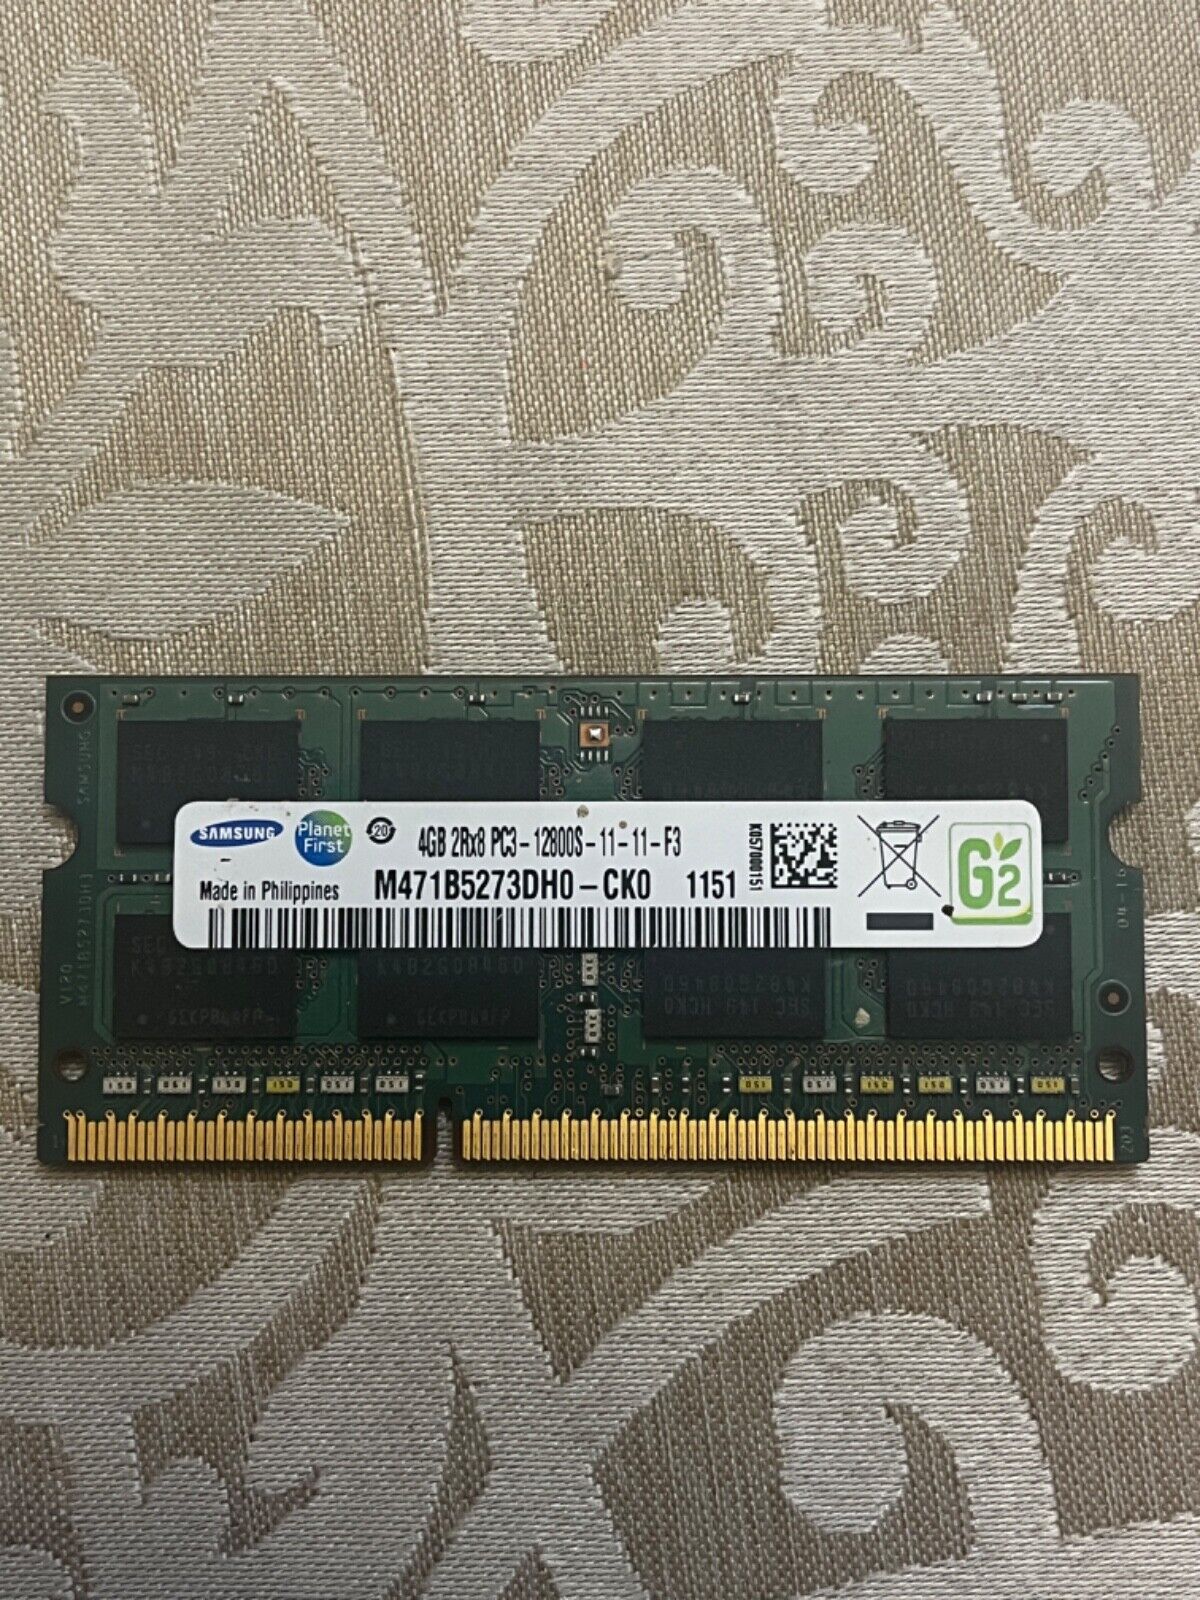 Samsung PC3-12800 (DDR3-1600) 4 GB SO-DIMM 1600 MHz PC3-12800 DDR3 Memory...